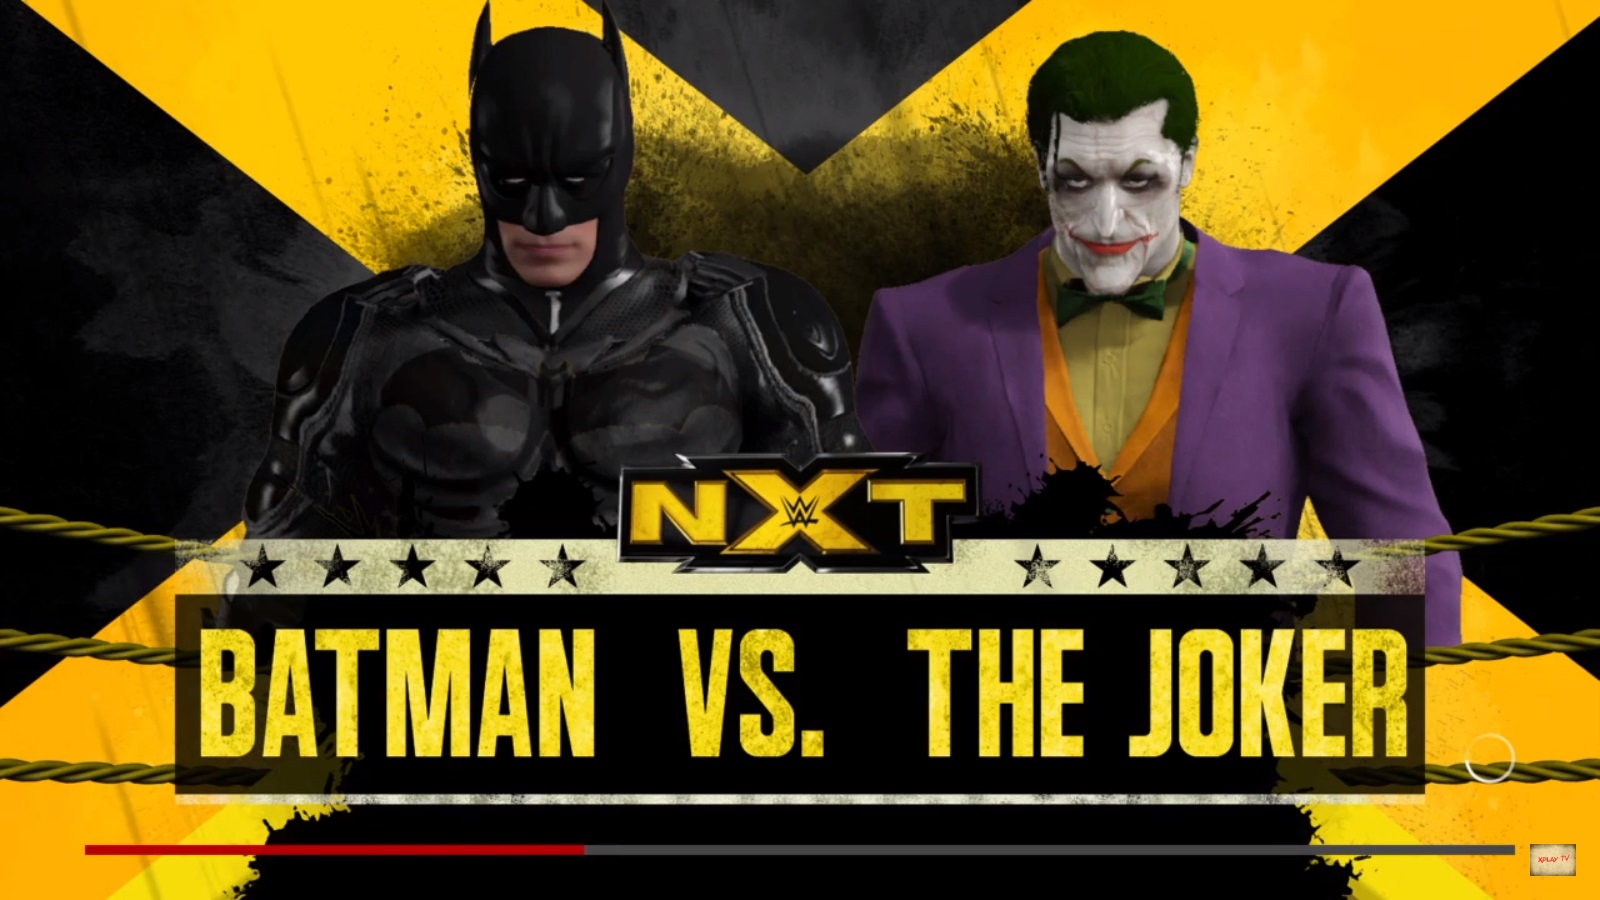 batman-vs-joker-wwe-2k17